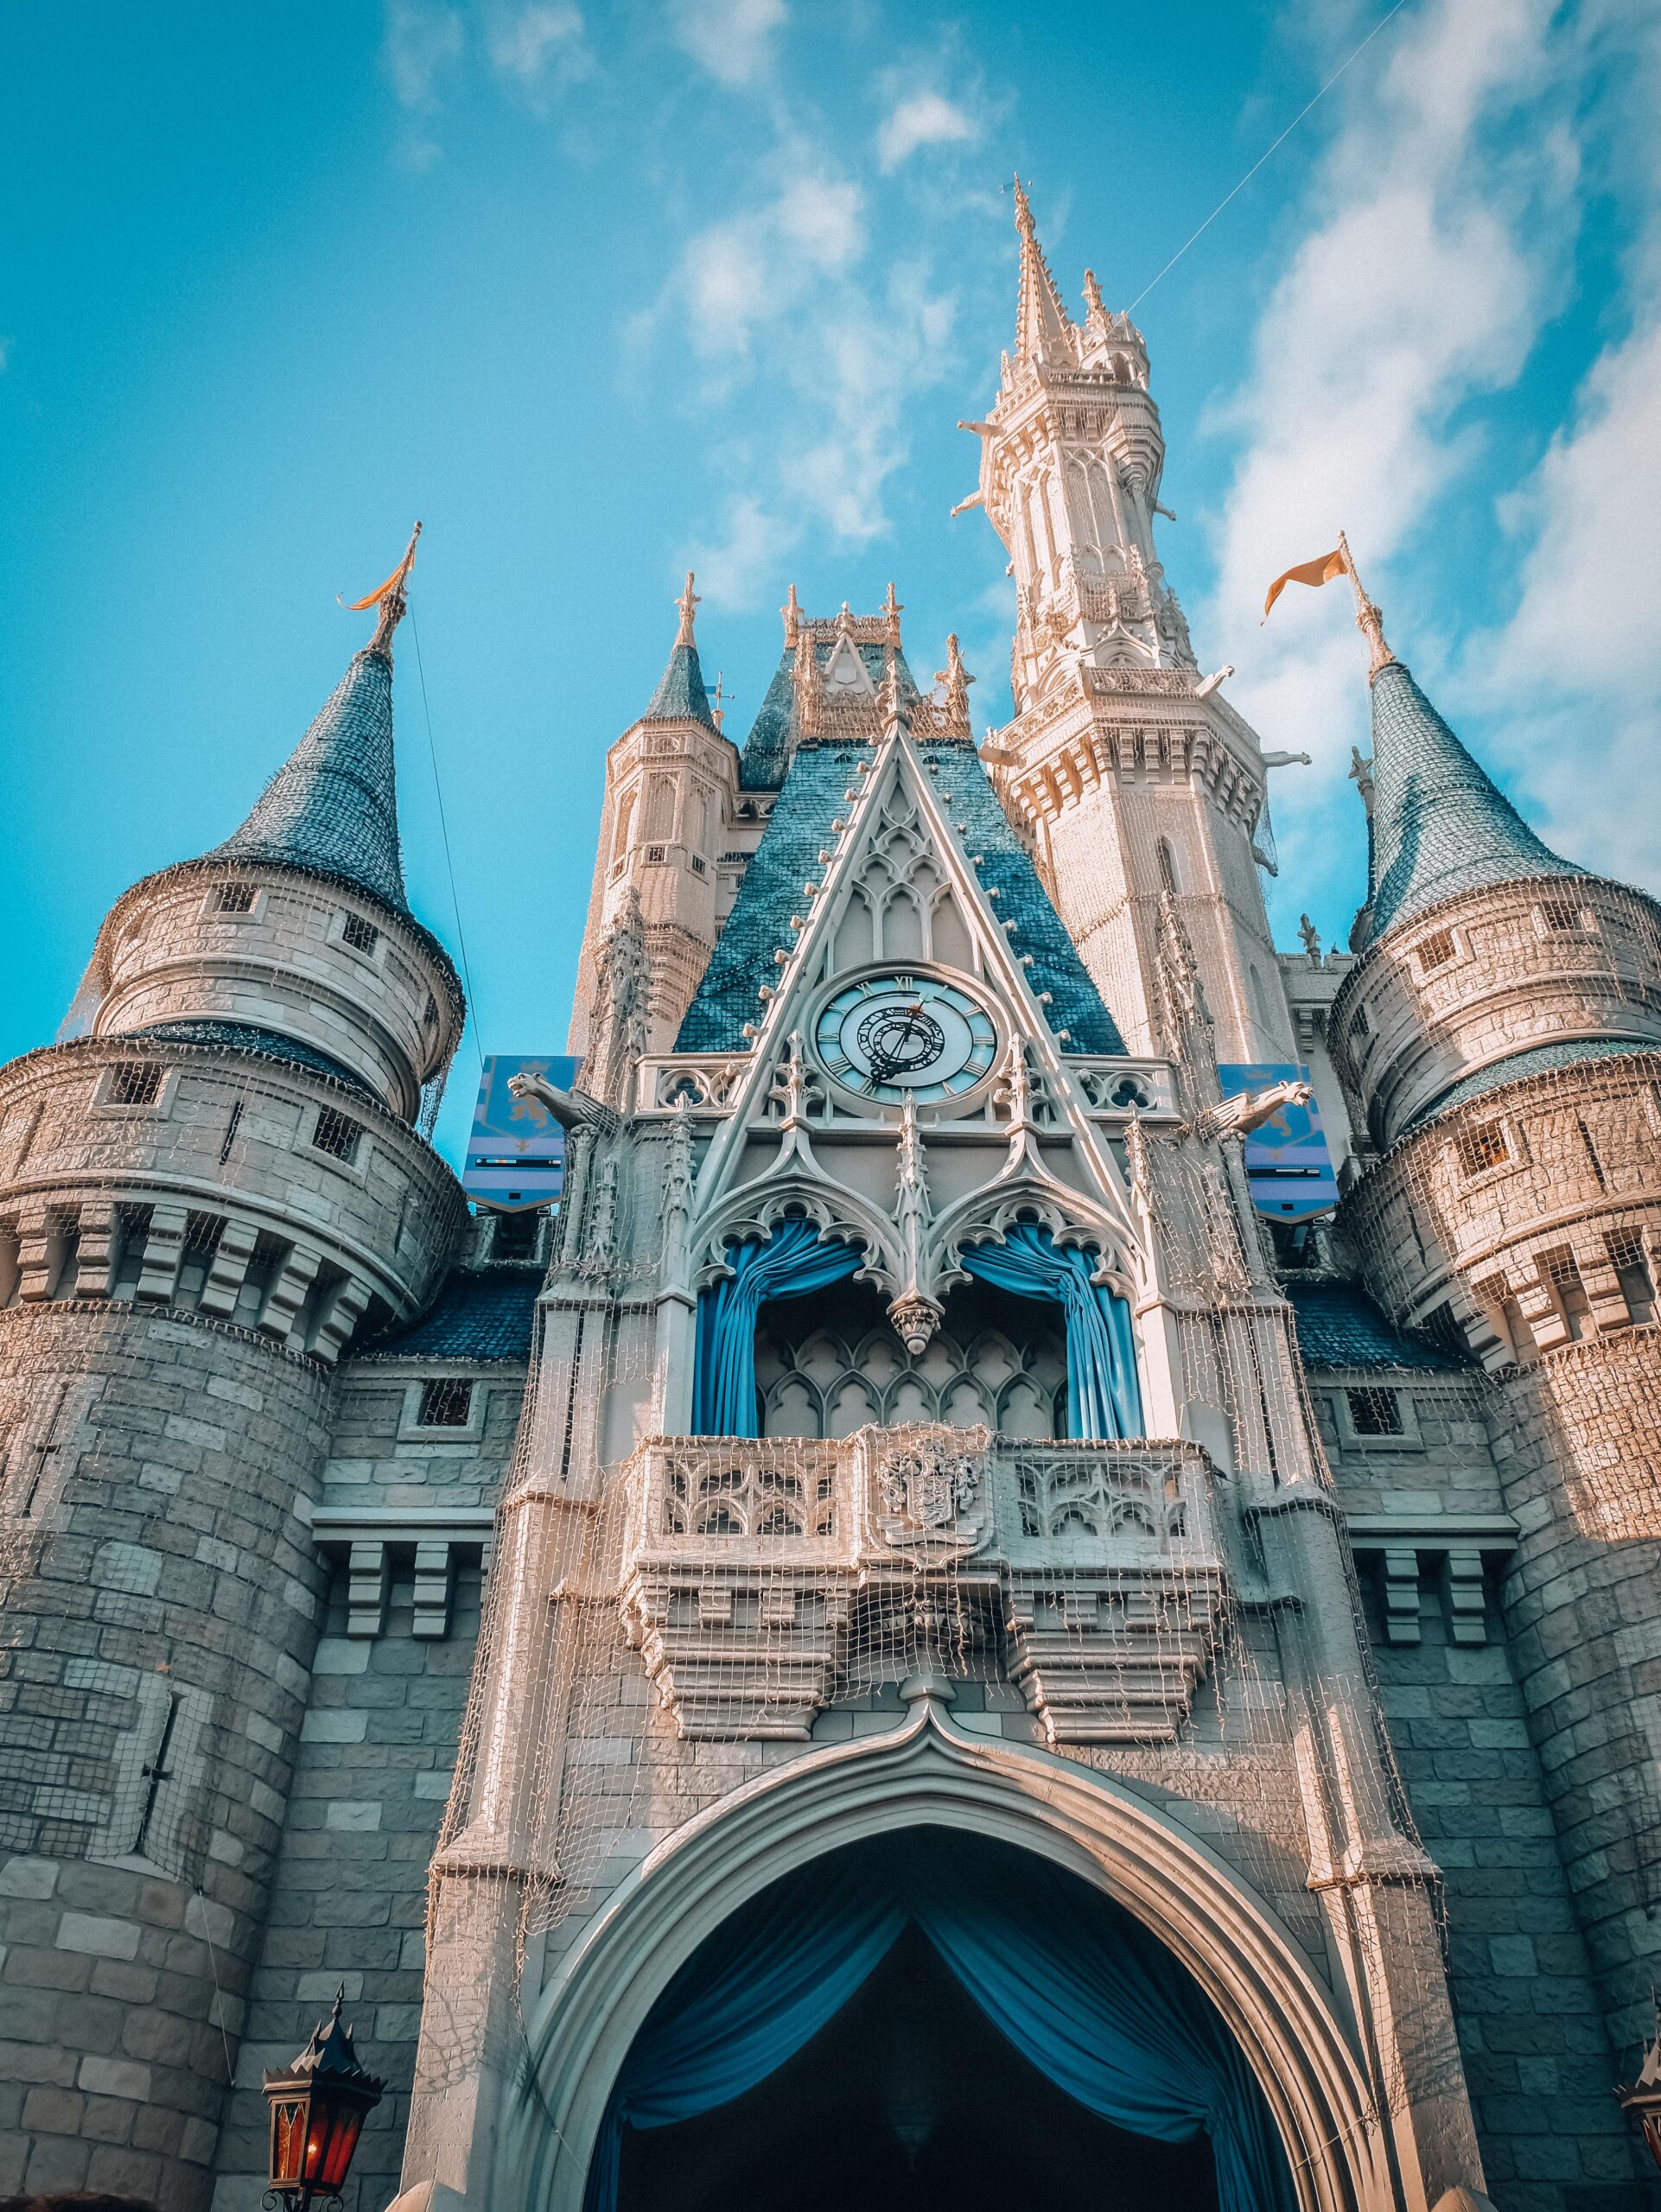 The Magic Kingdom Castle